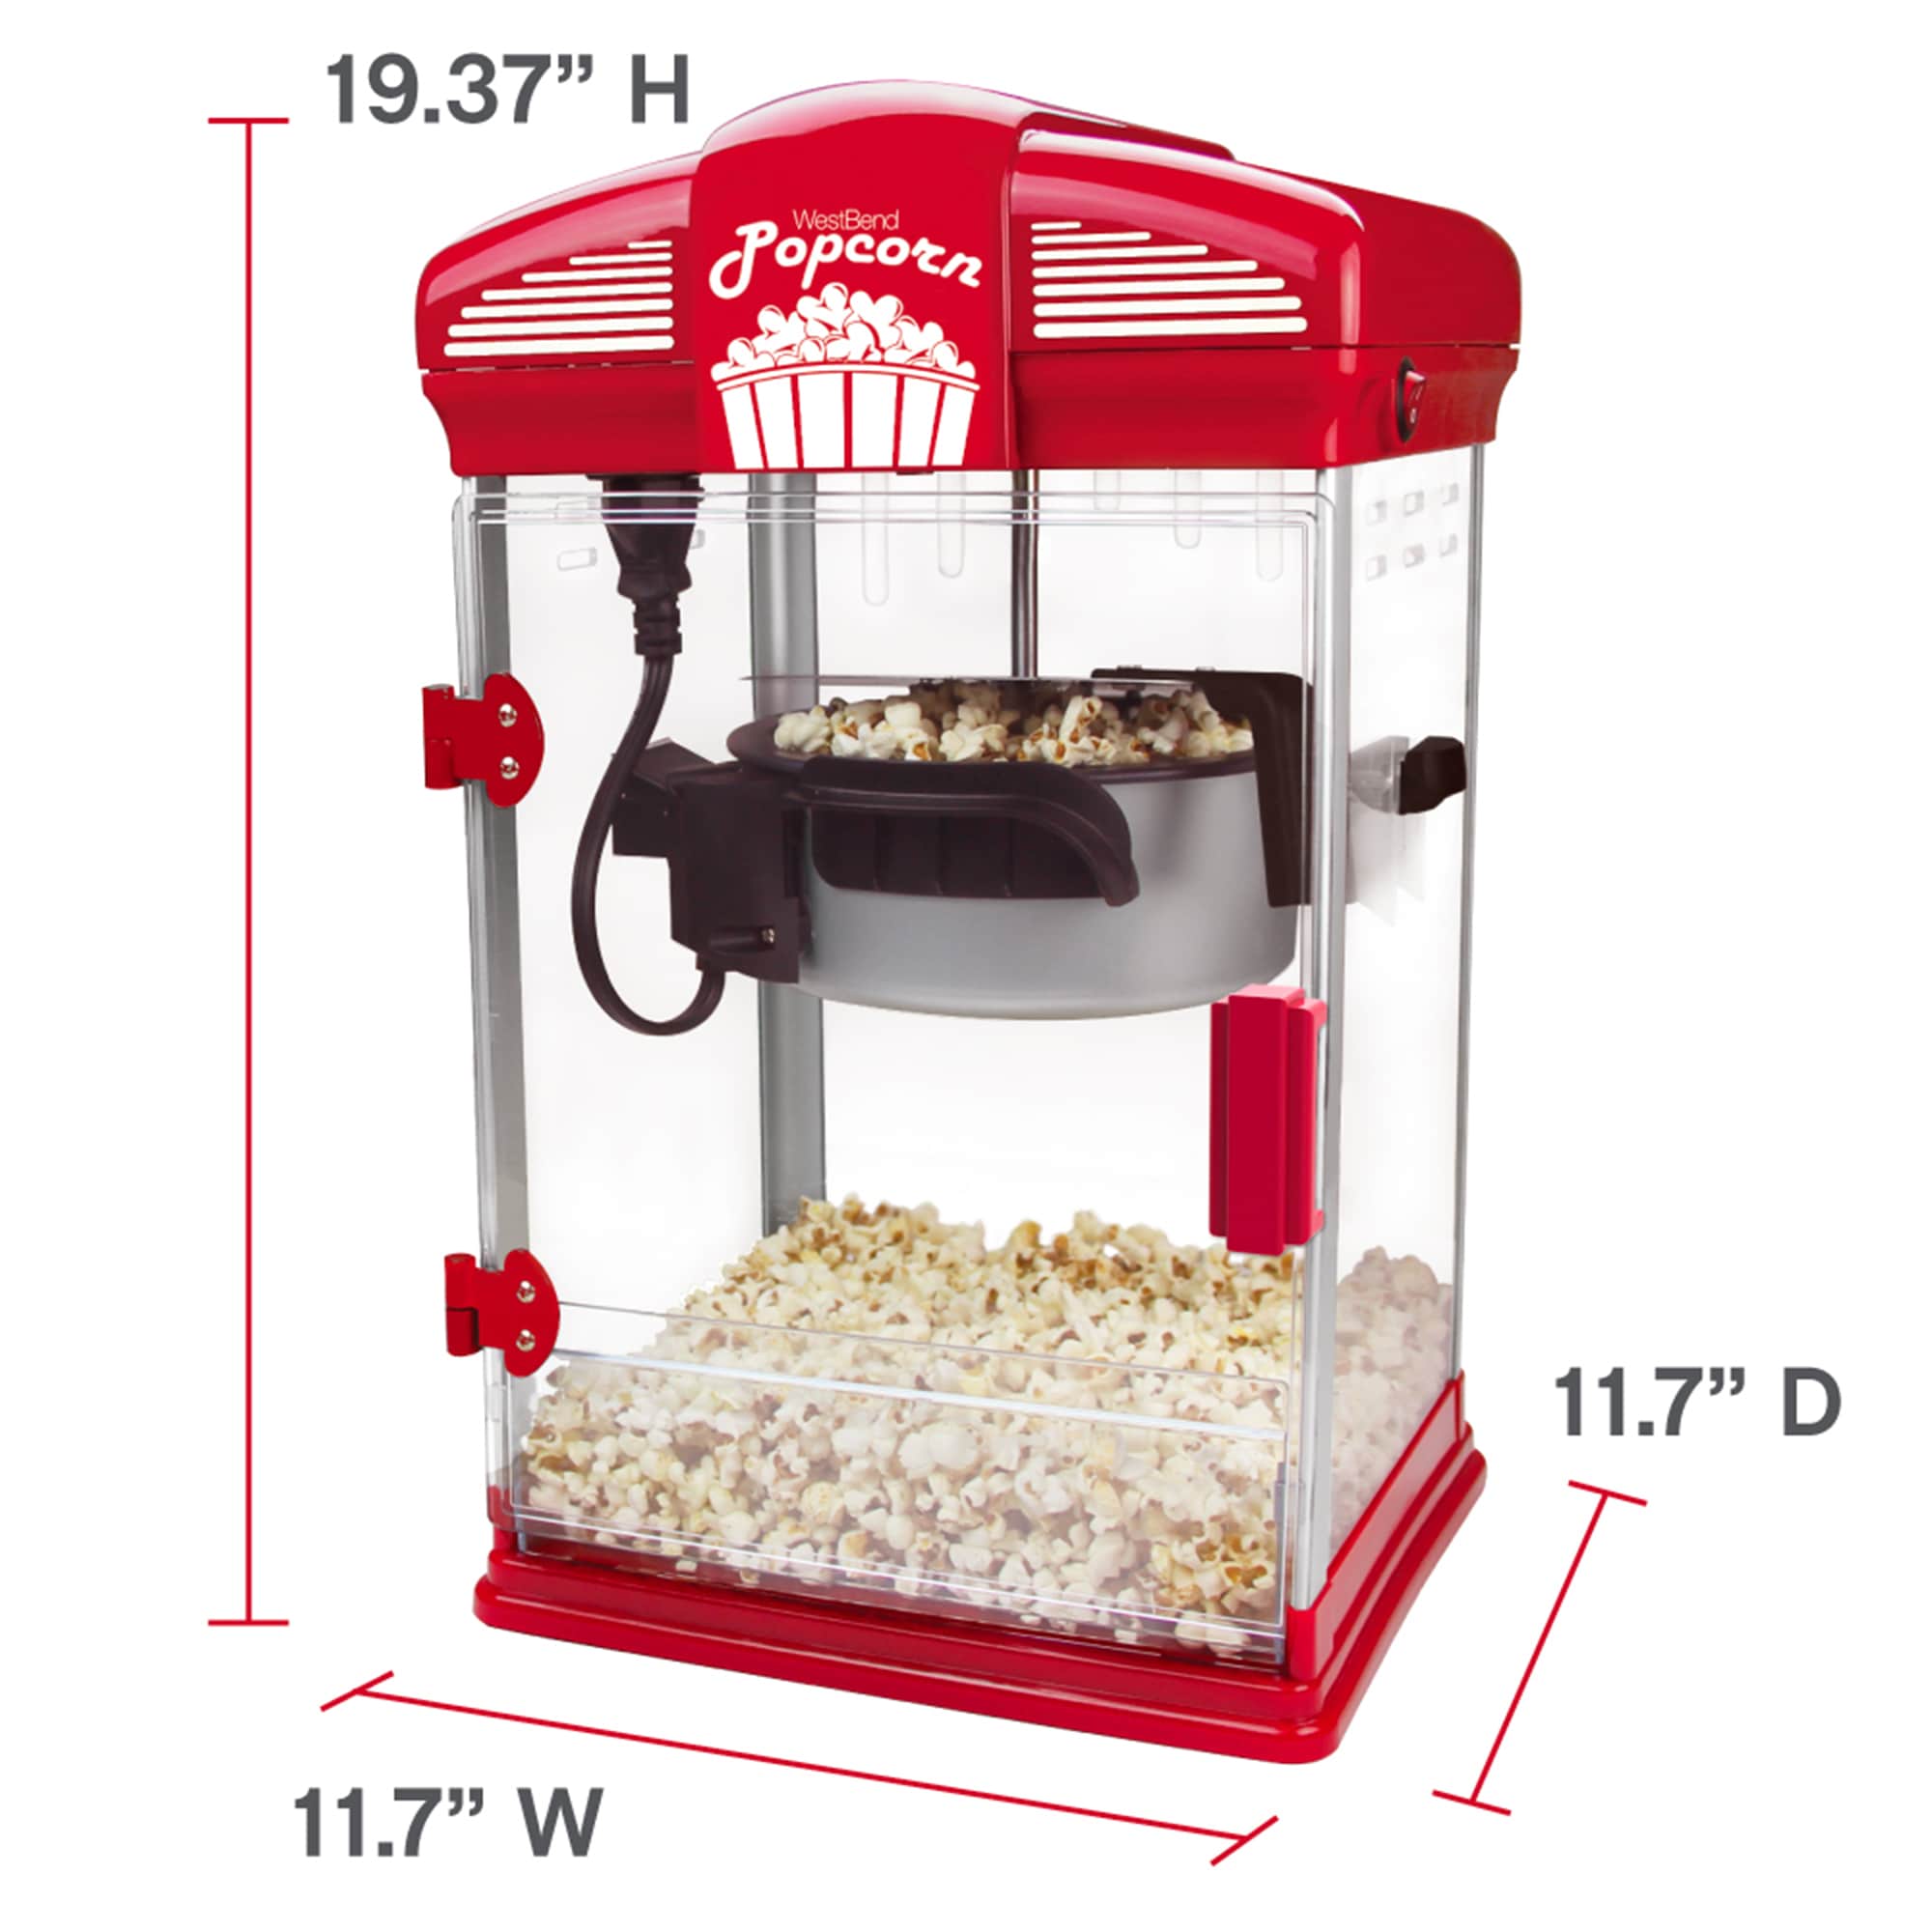 Retro 2.5 oz. Kettle Popcorn Maker RKP730 - The Home Depot